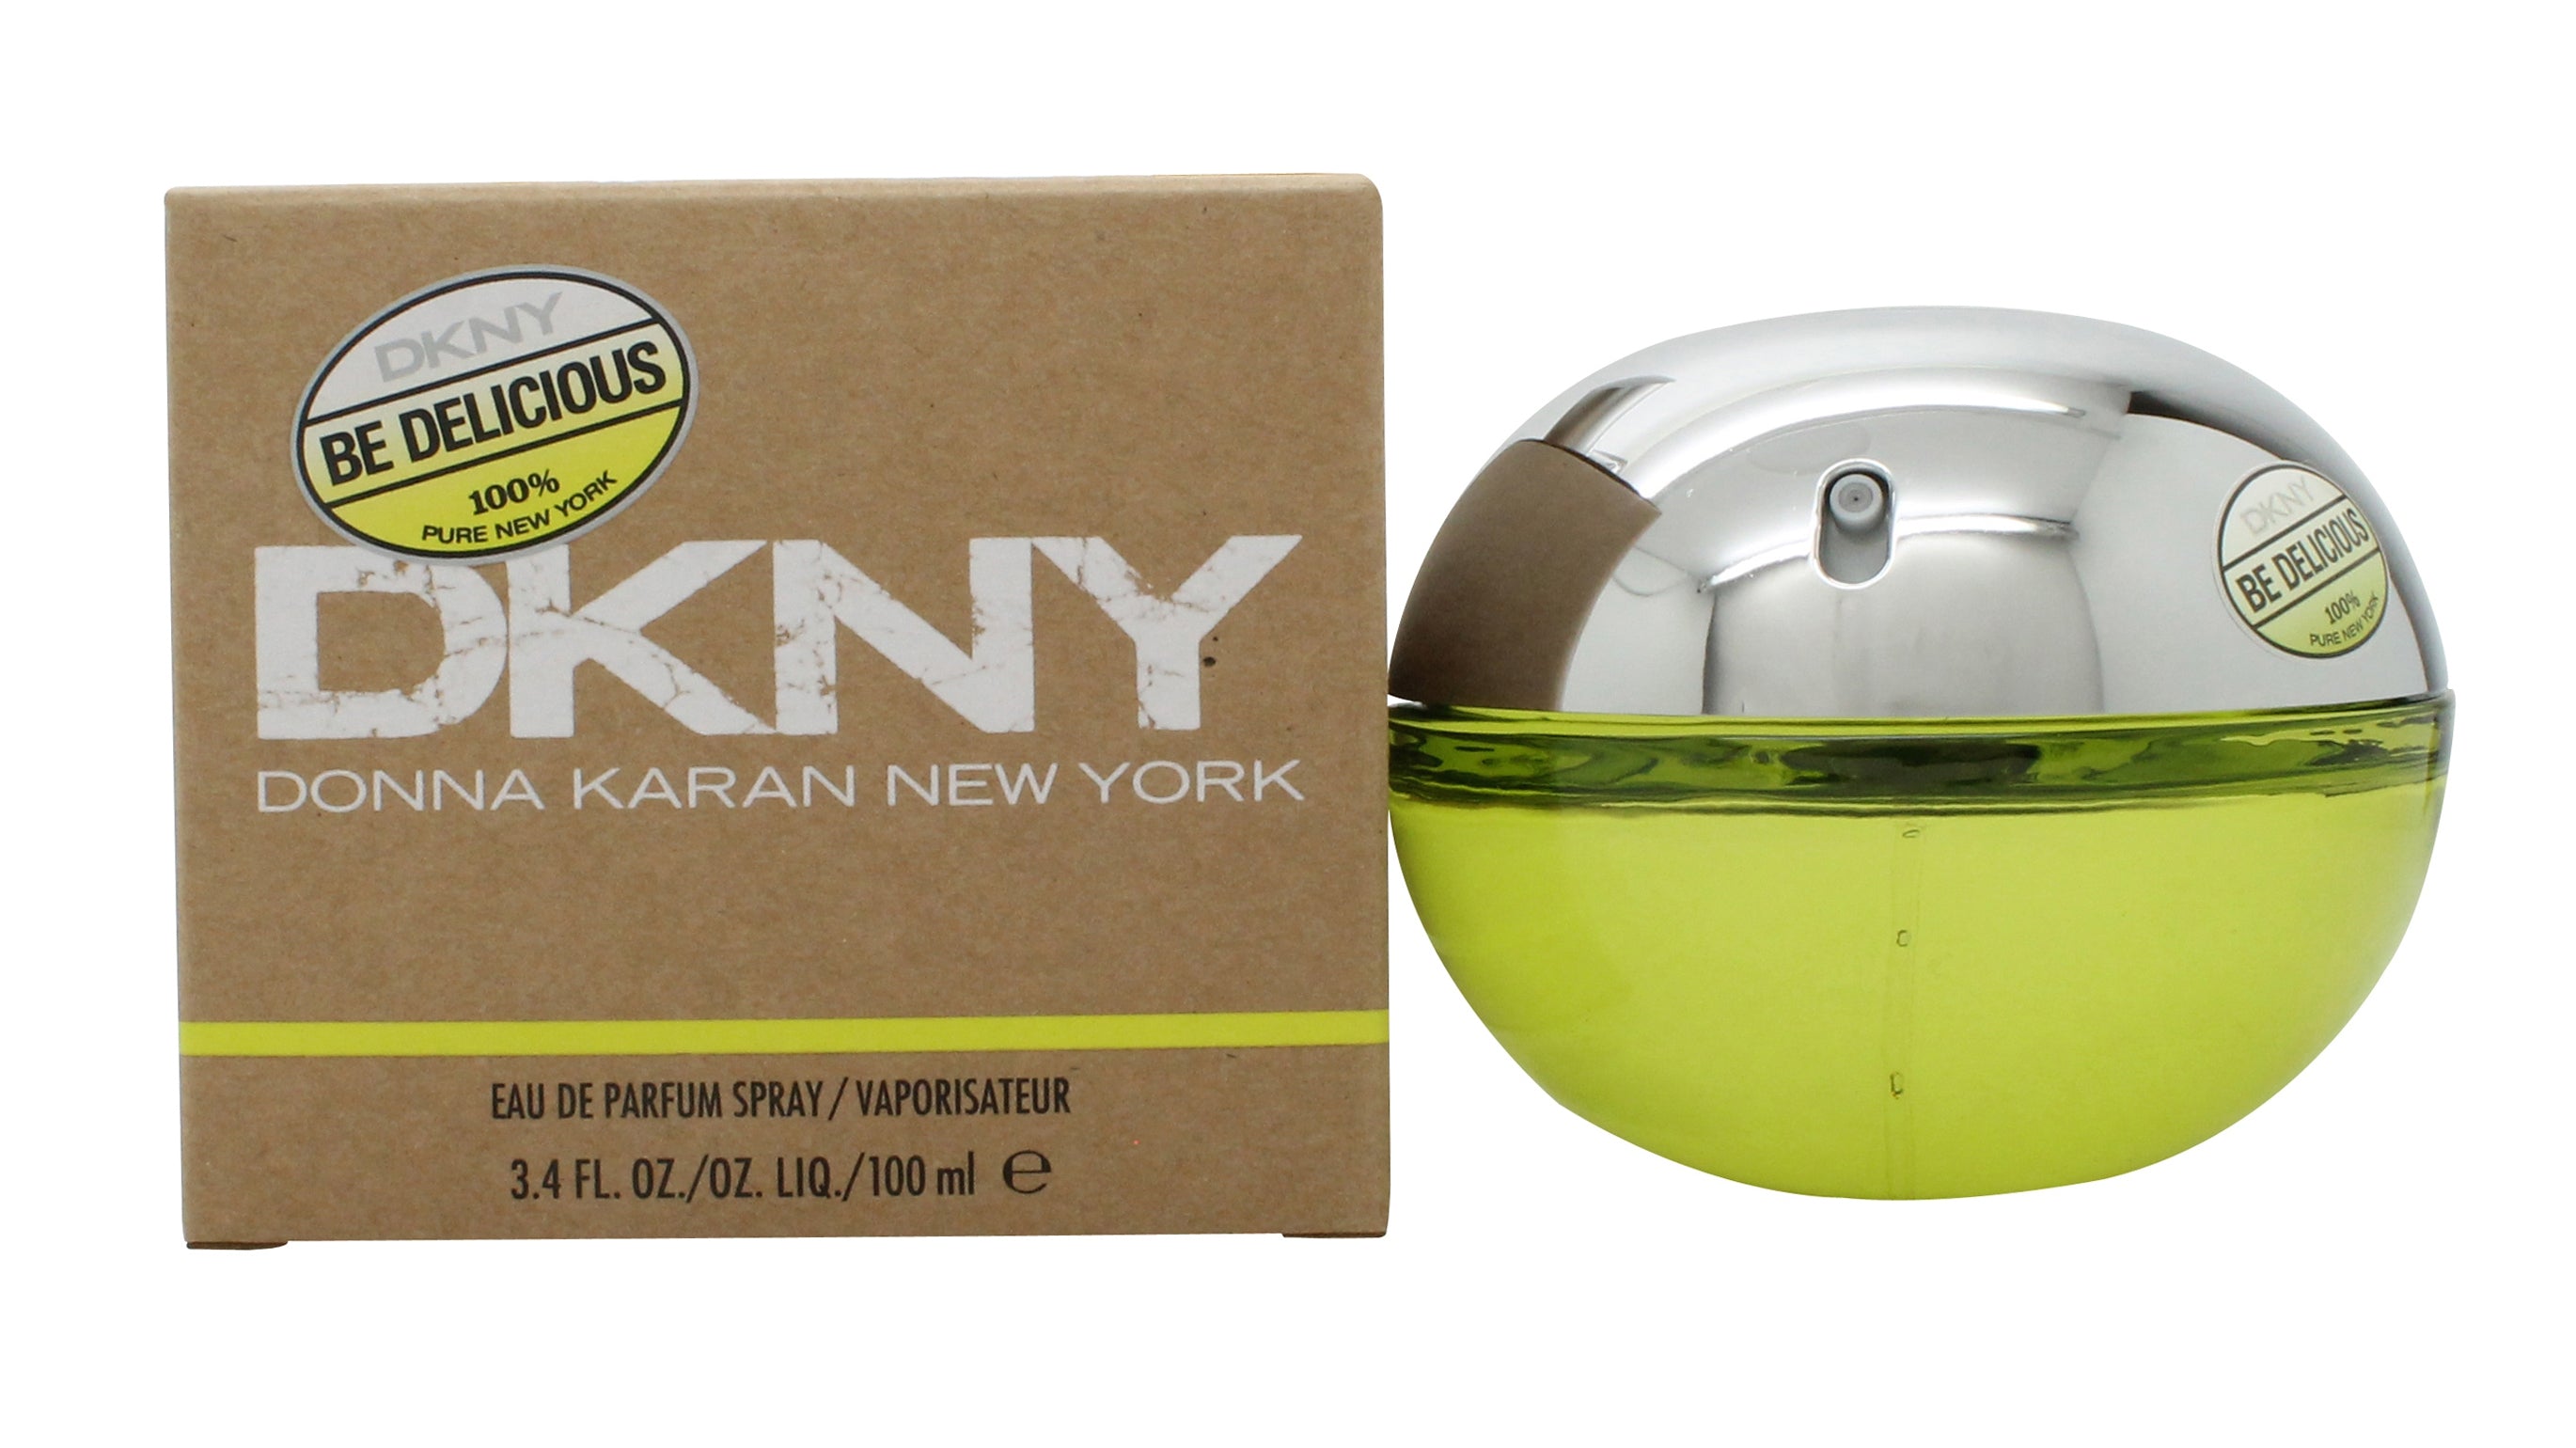 View DKNY Be Delicious Eau de Parfum 100ml Spray information